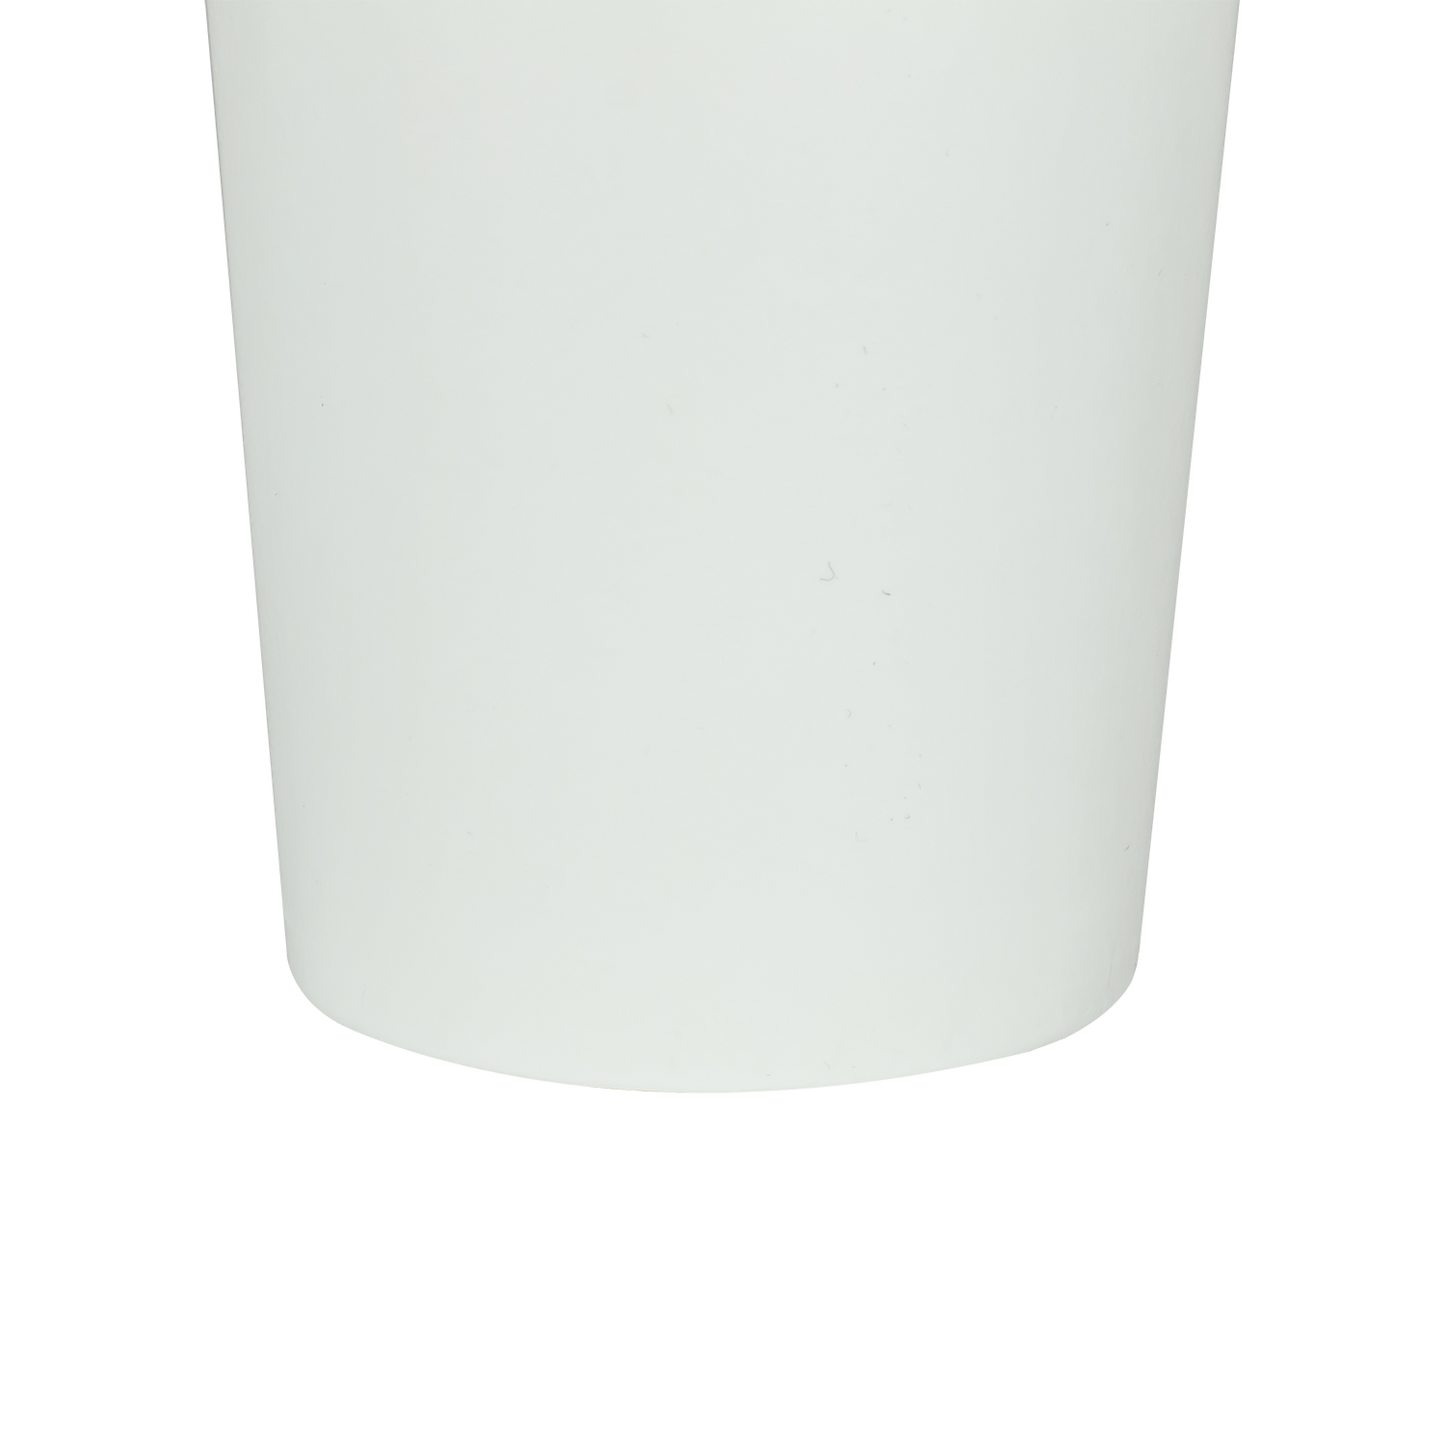 Karat 22oz Paper Cold Cup - White (90mm) - 1,000 ct